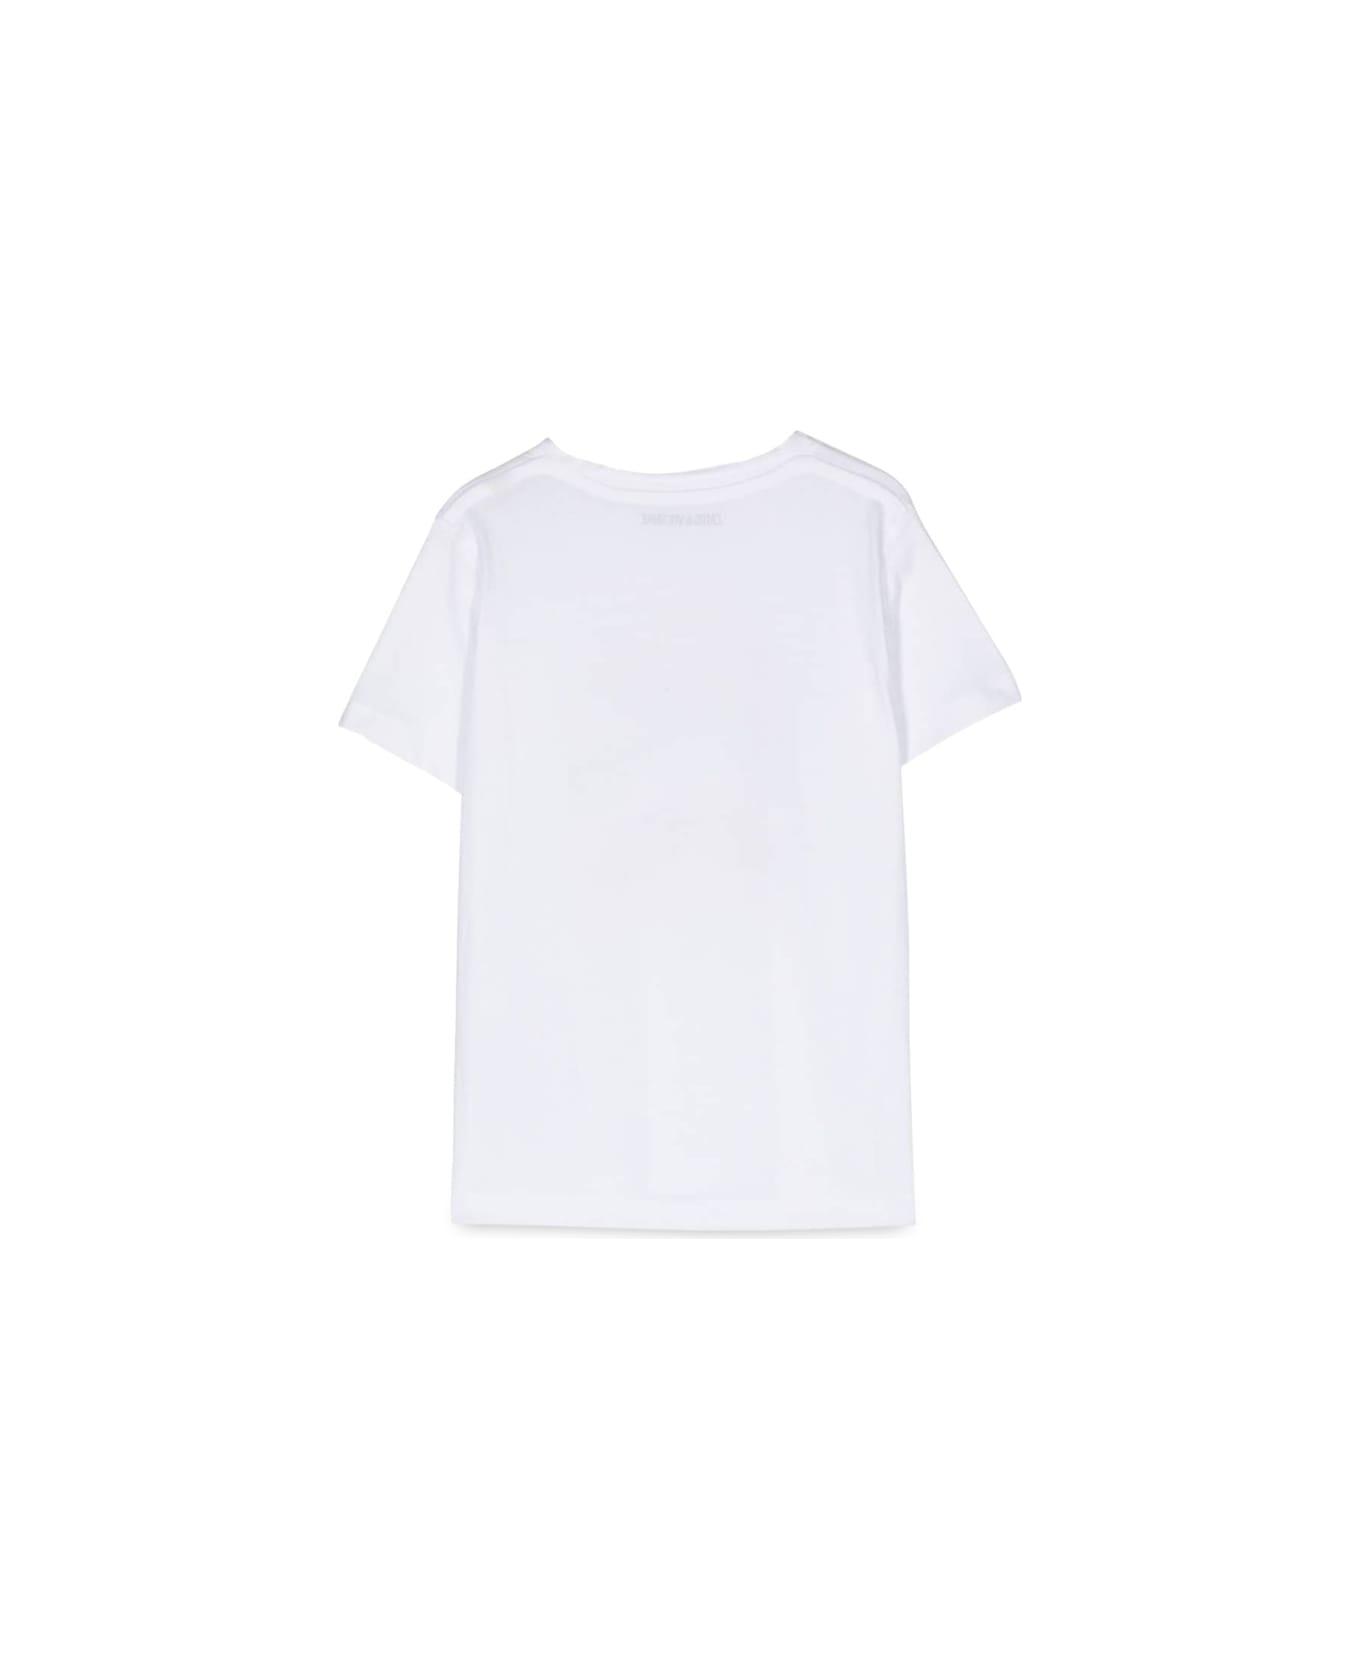 Zadig & Voltaire Tee Shirt - WHITE